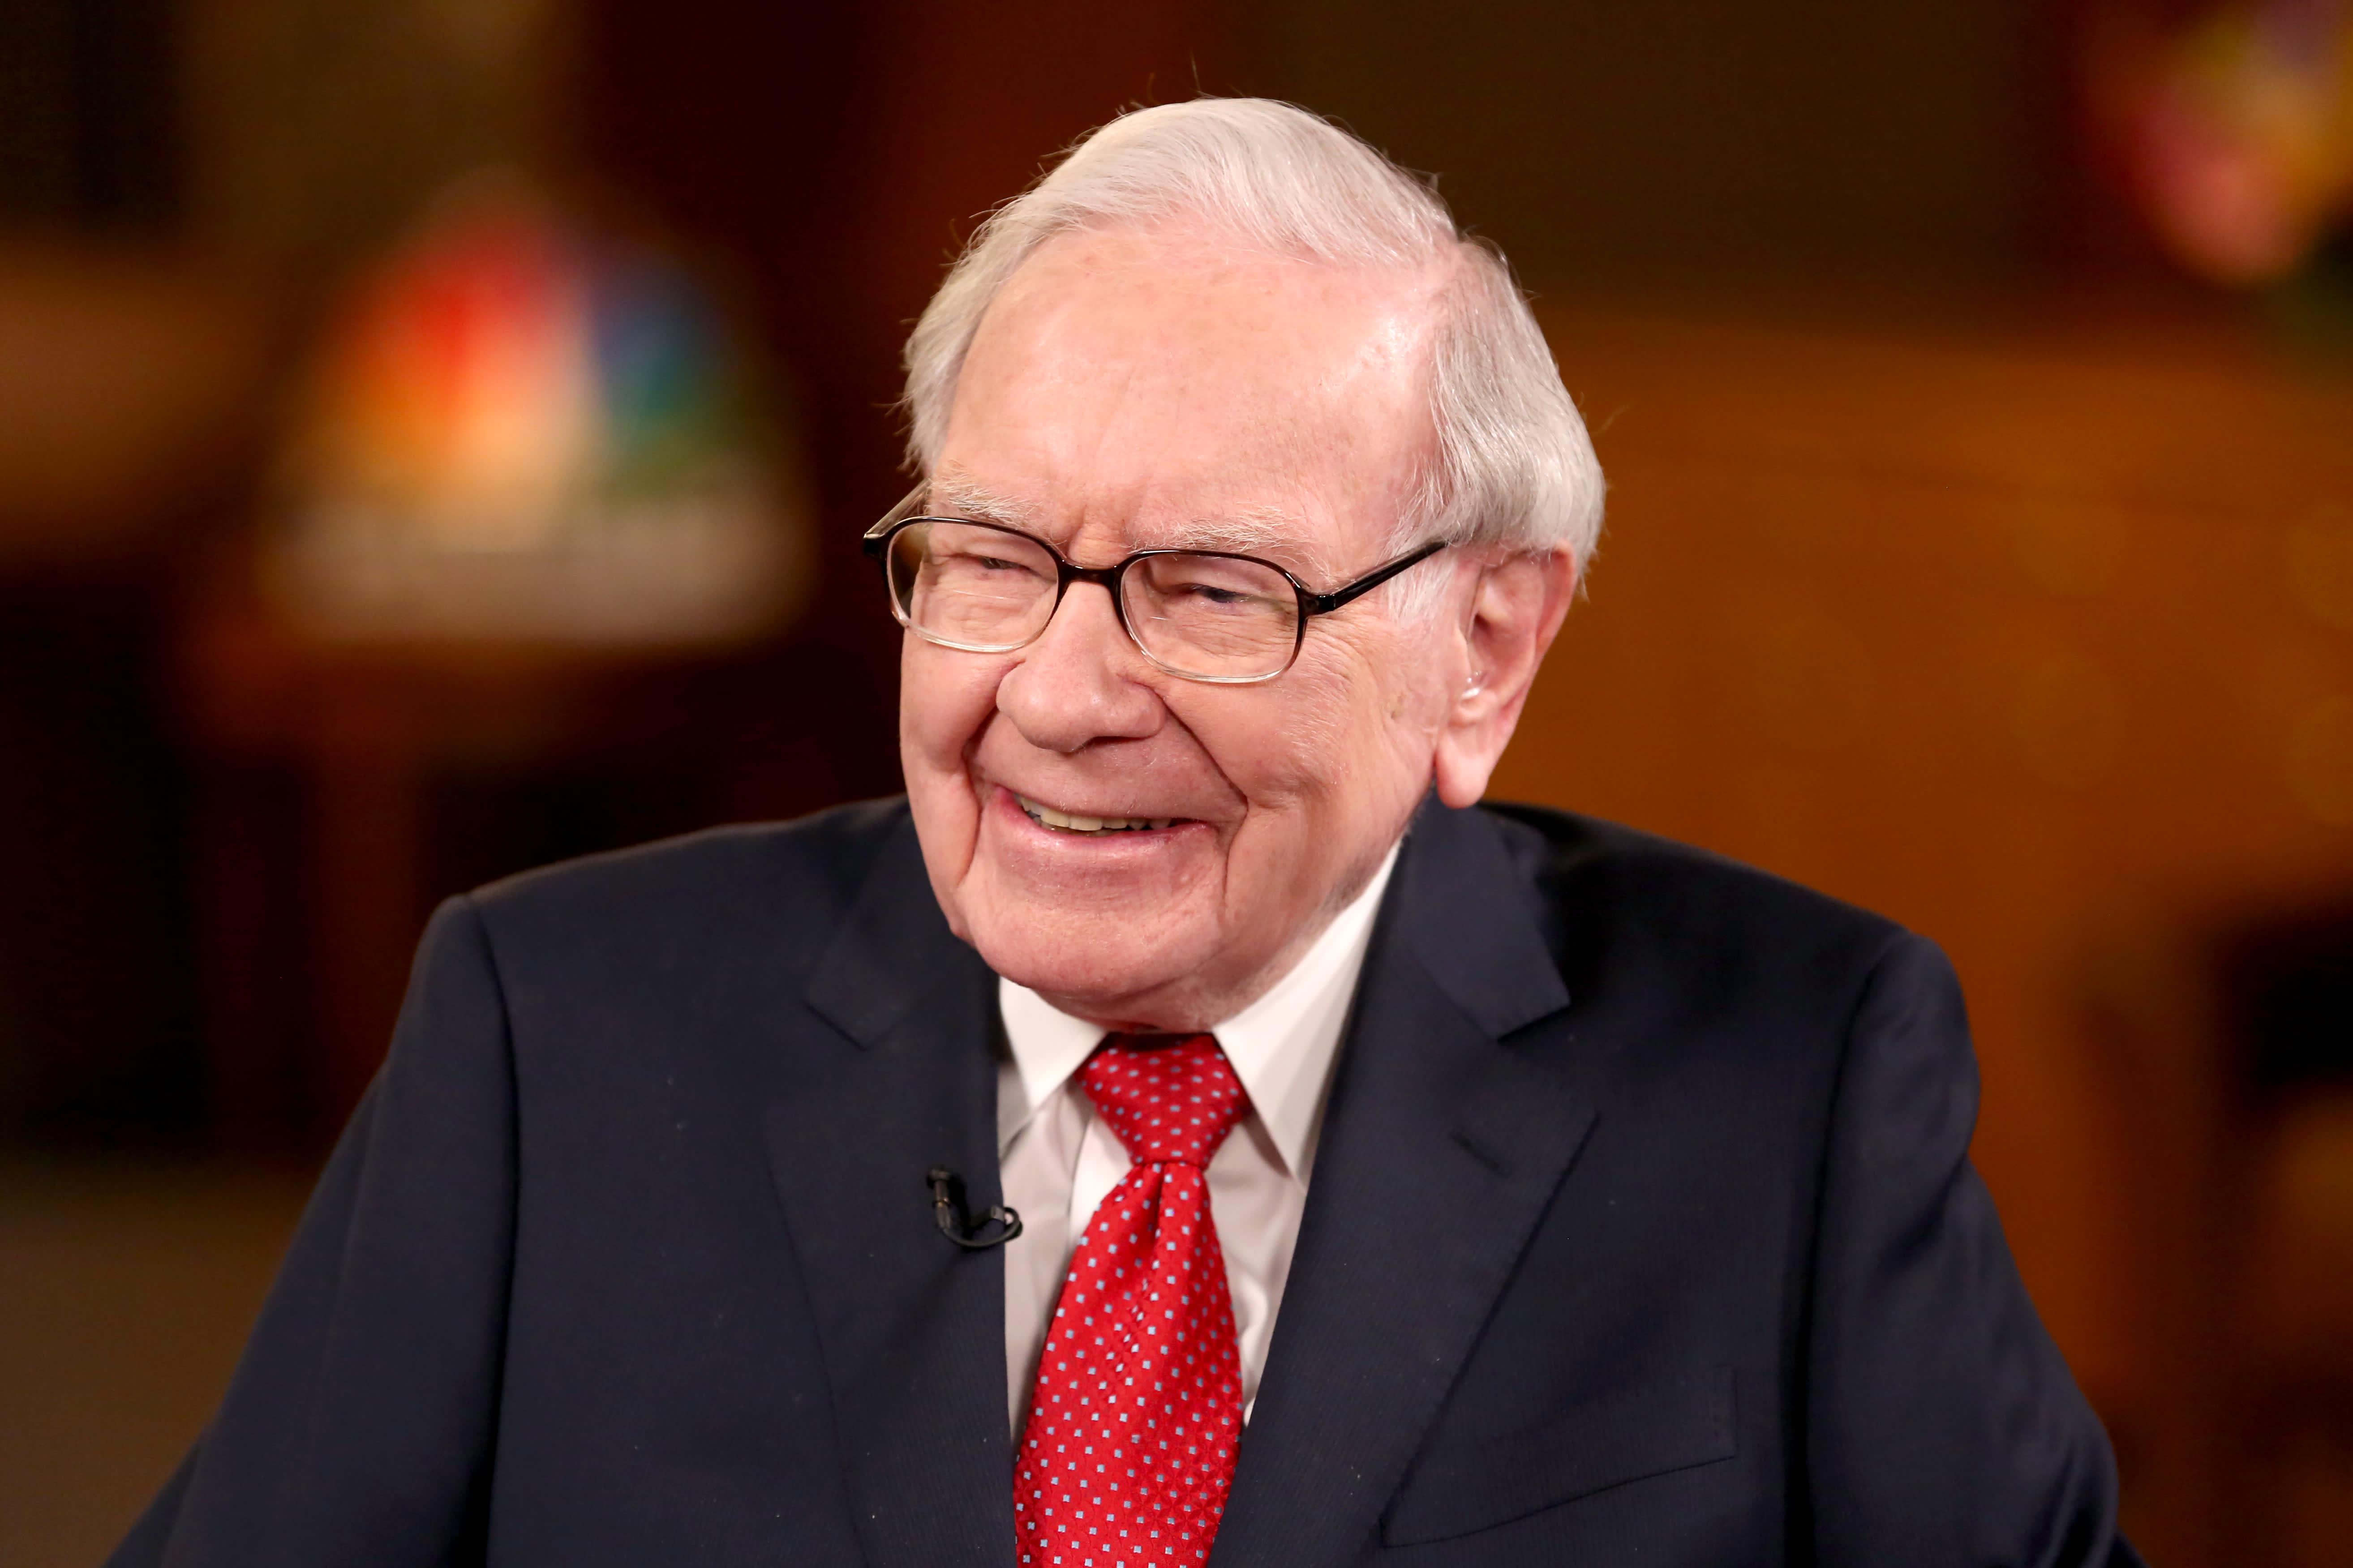 Warren Buffett’s net worth exceeds $ 100 billion for the first time when Berkshire shares hit a record high